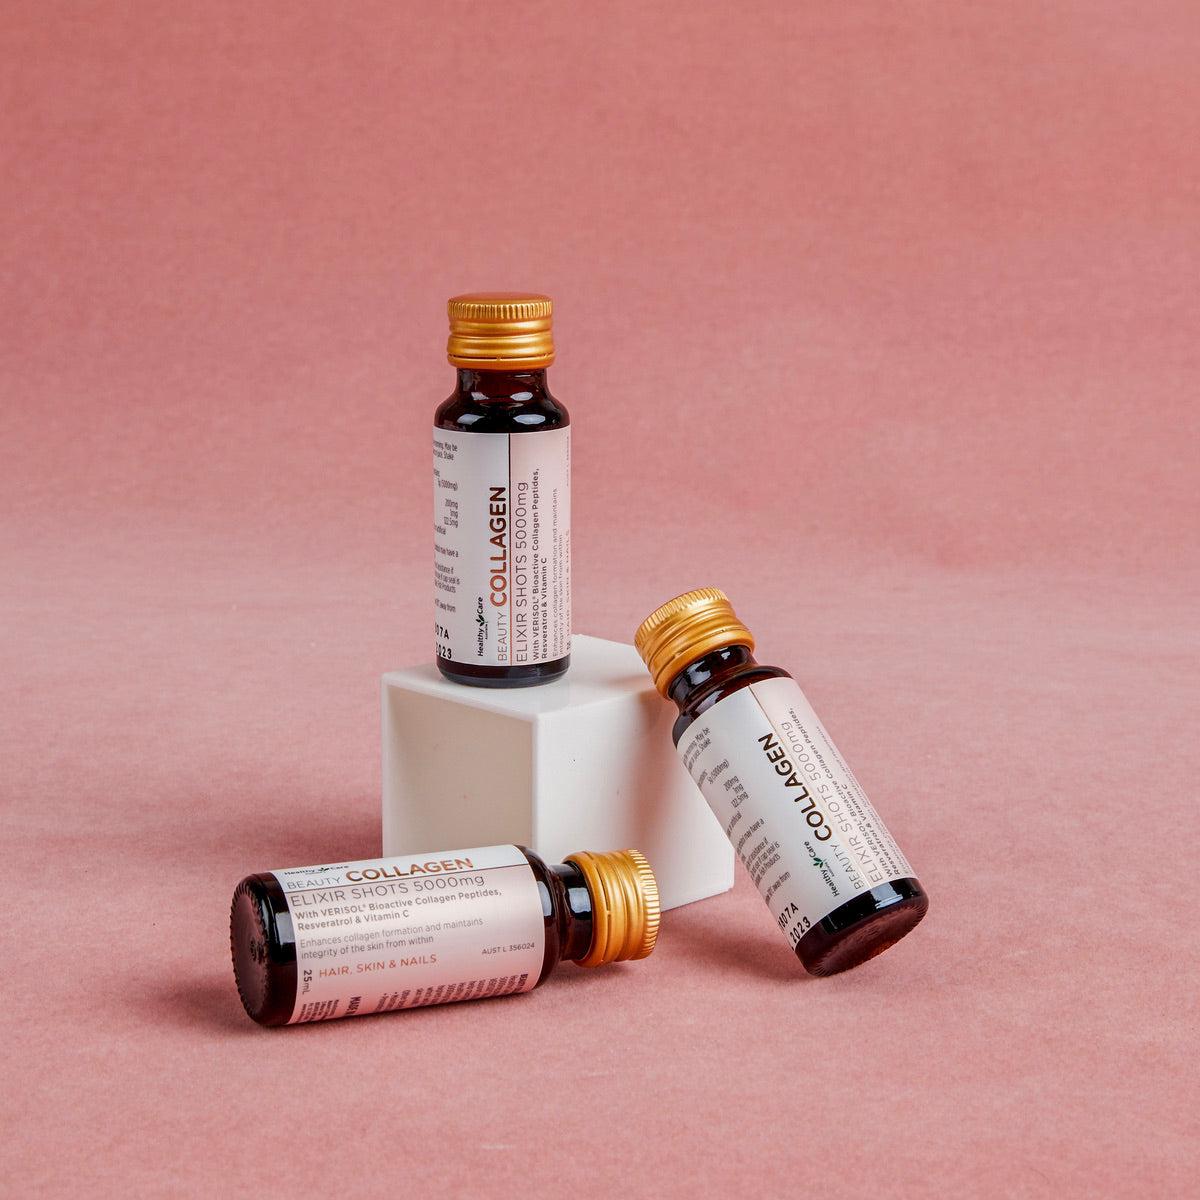 3 bottles of Beauty Collagen Elixir Shots 5,000mg 25ml-Vitamins & Supplements-Healthy Care Australia